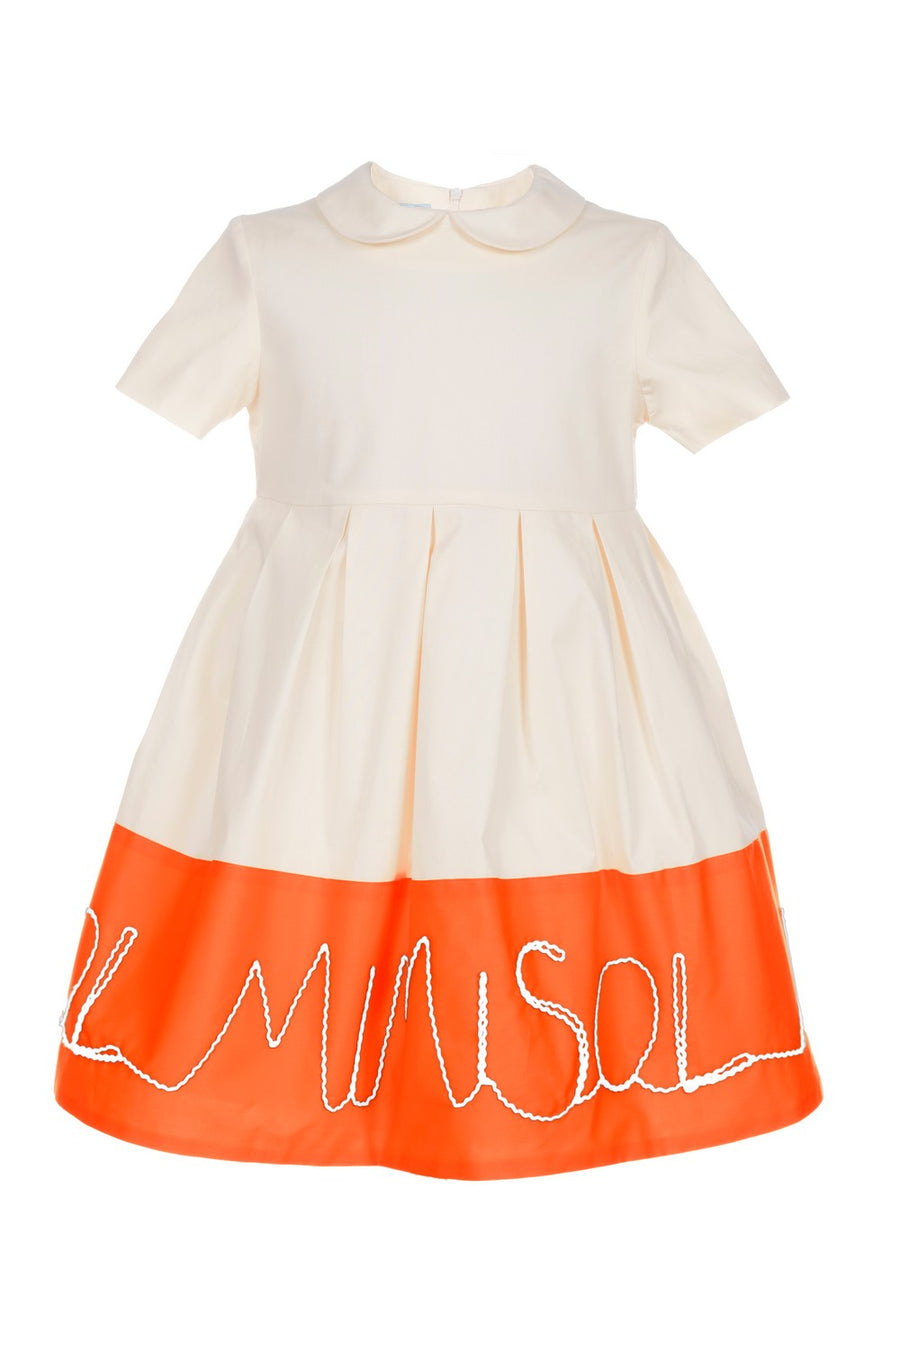 Cream orange dress by Mimisol